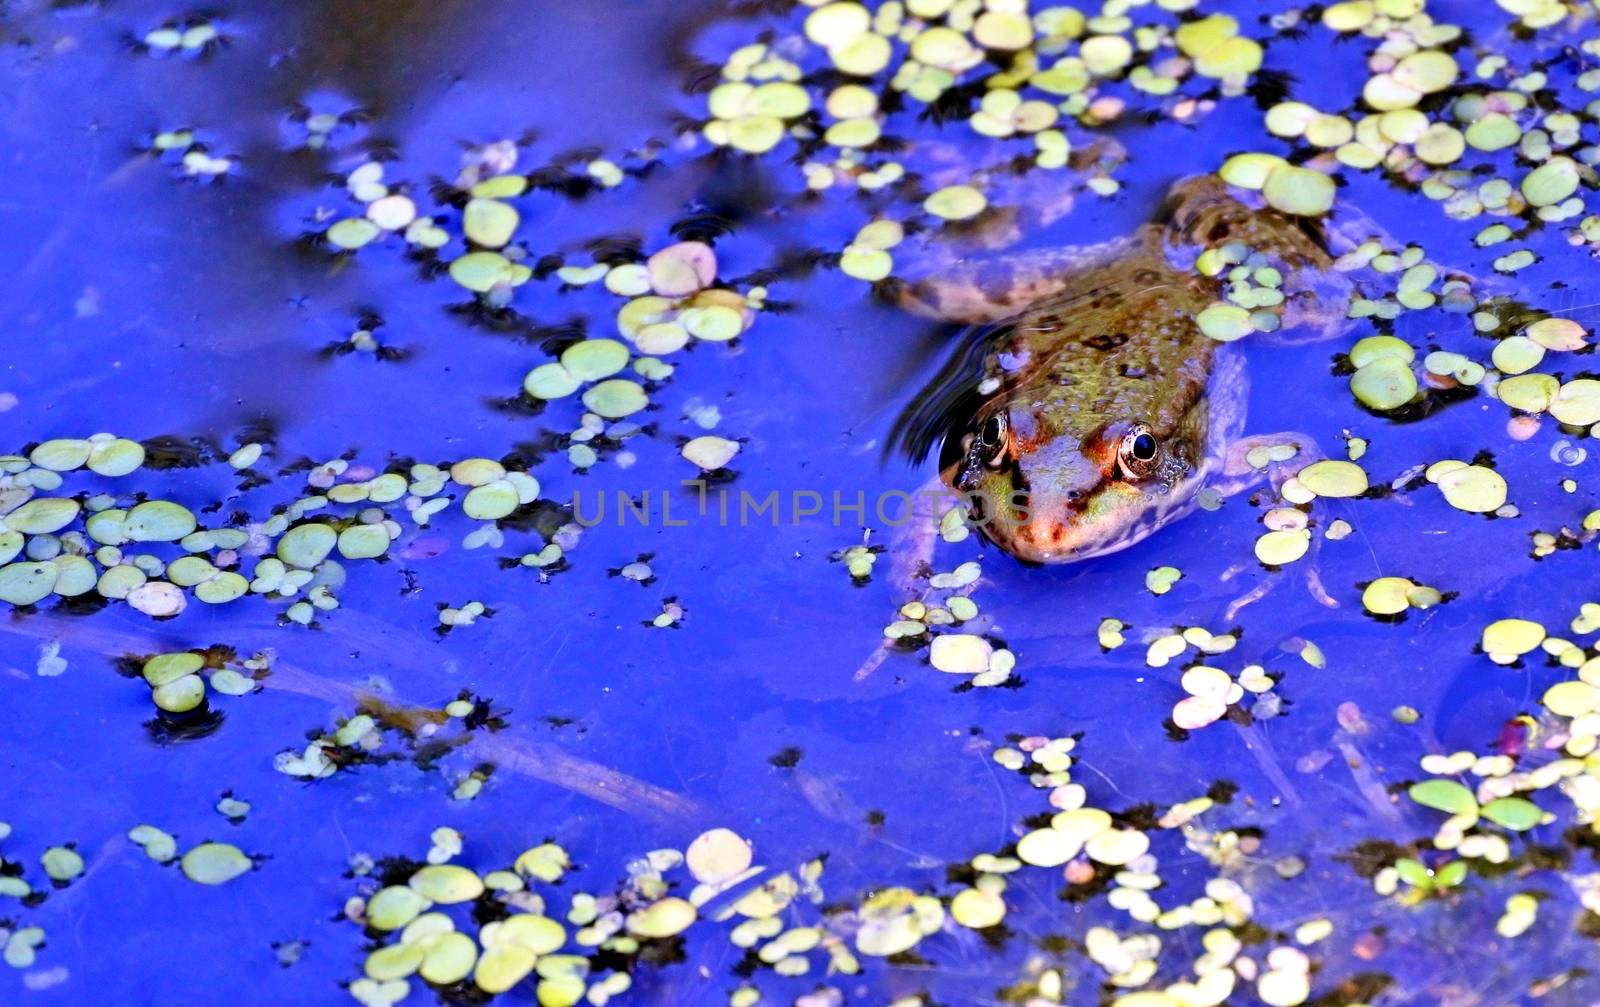 a frog in the lake, among aquatic plants